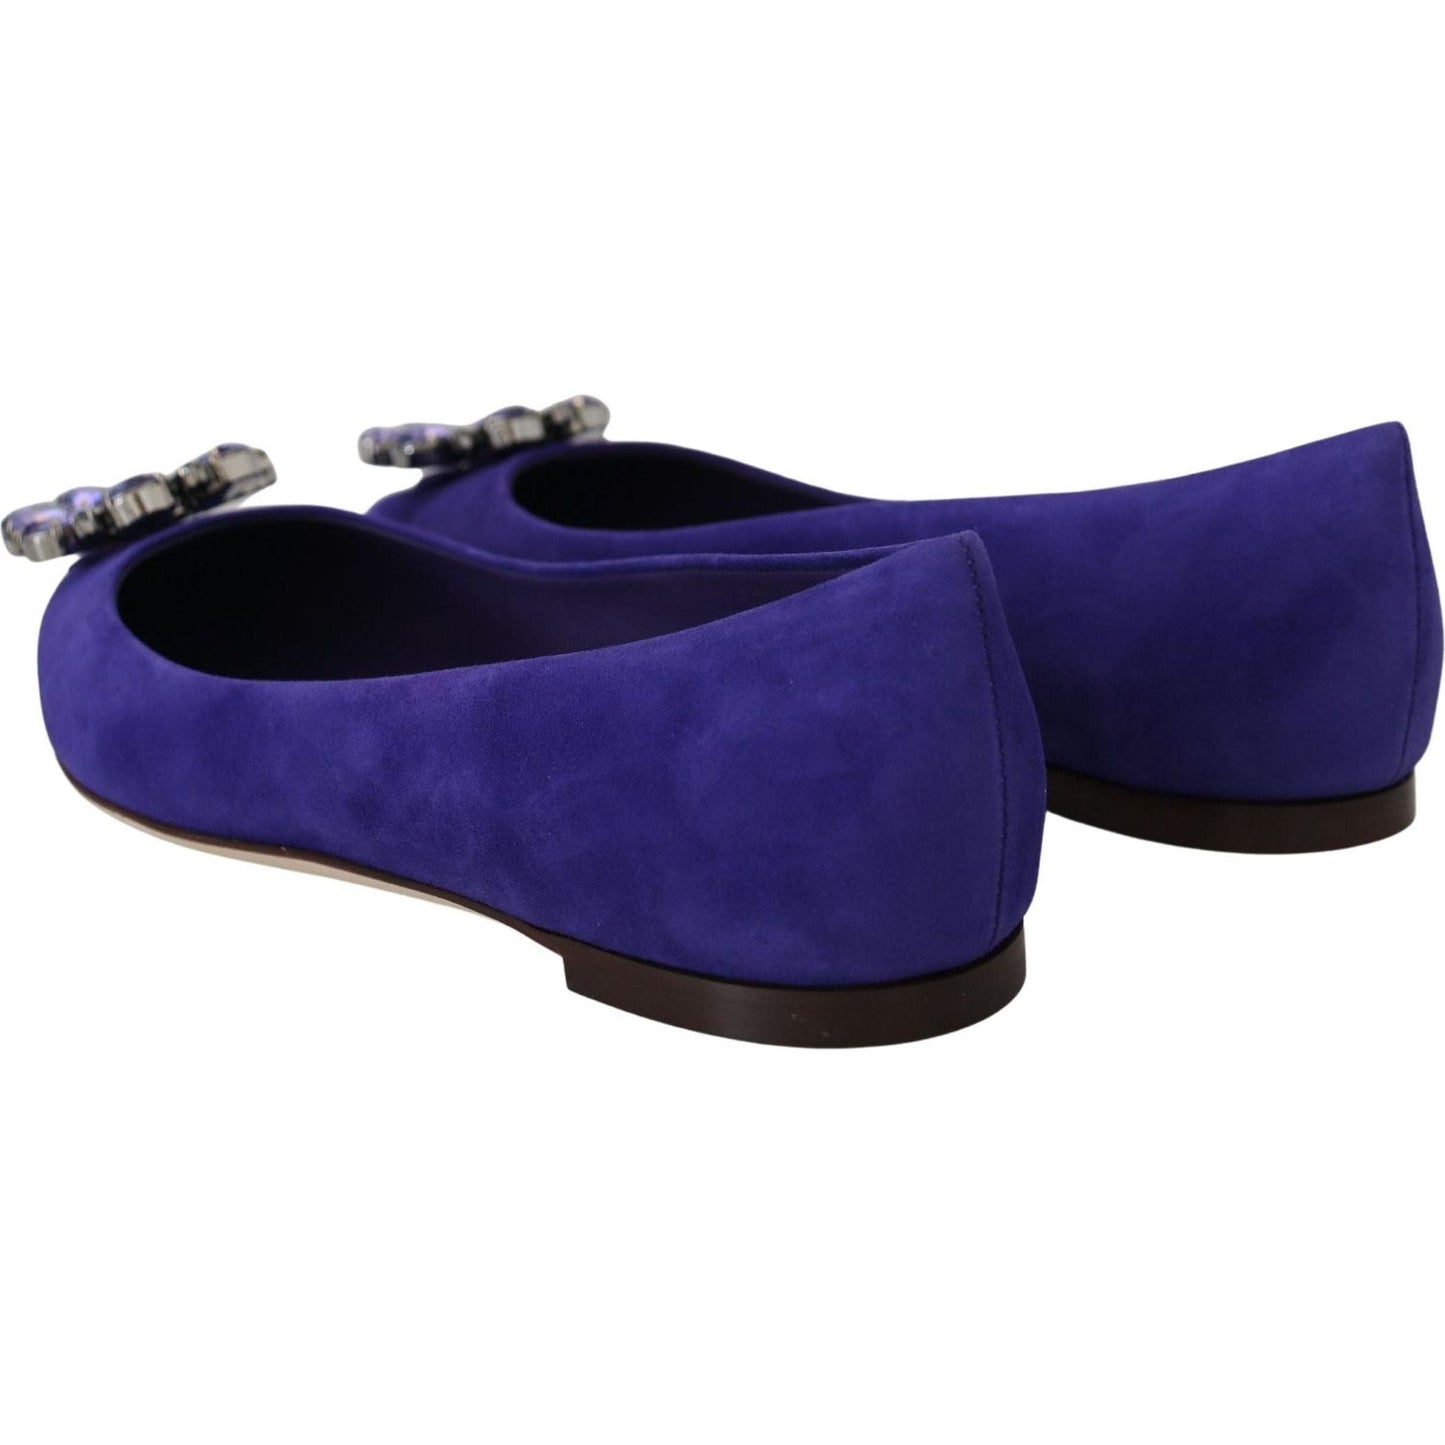 Dolce & Gabbana Embellished Crystal Purple Suede Flats purple-suede-crystals-loafers-flats-shoes IMG_8916-scaled-65e6d811-1ad.jpg